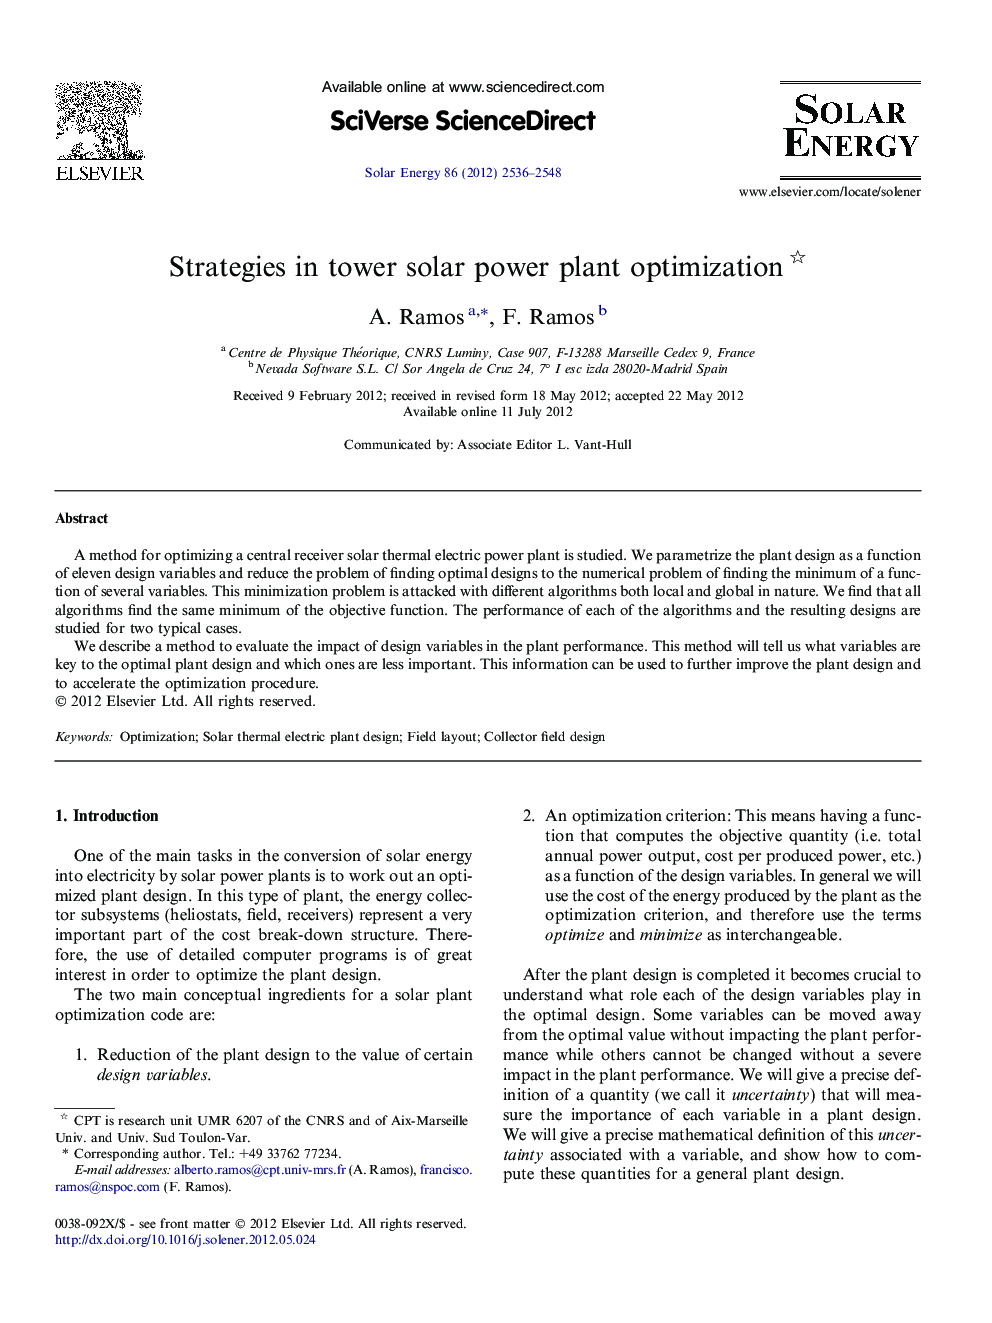 Strategies in tower solar power plant optimization 